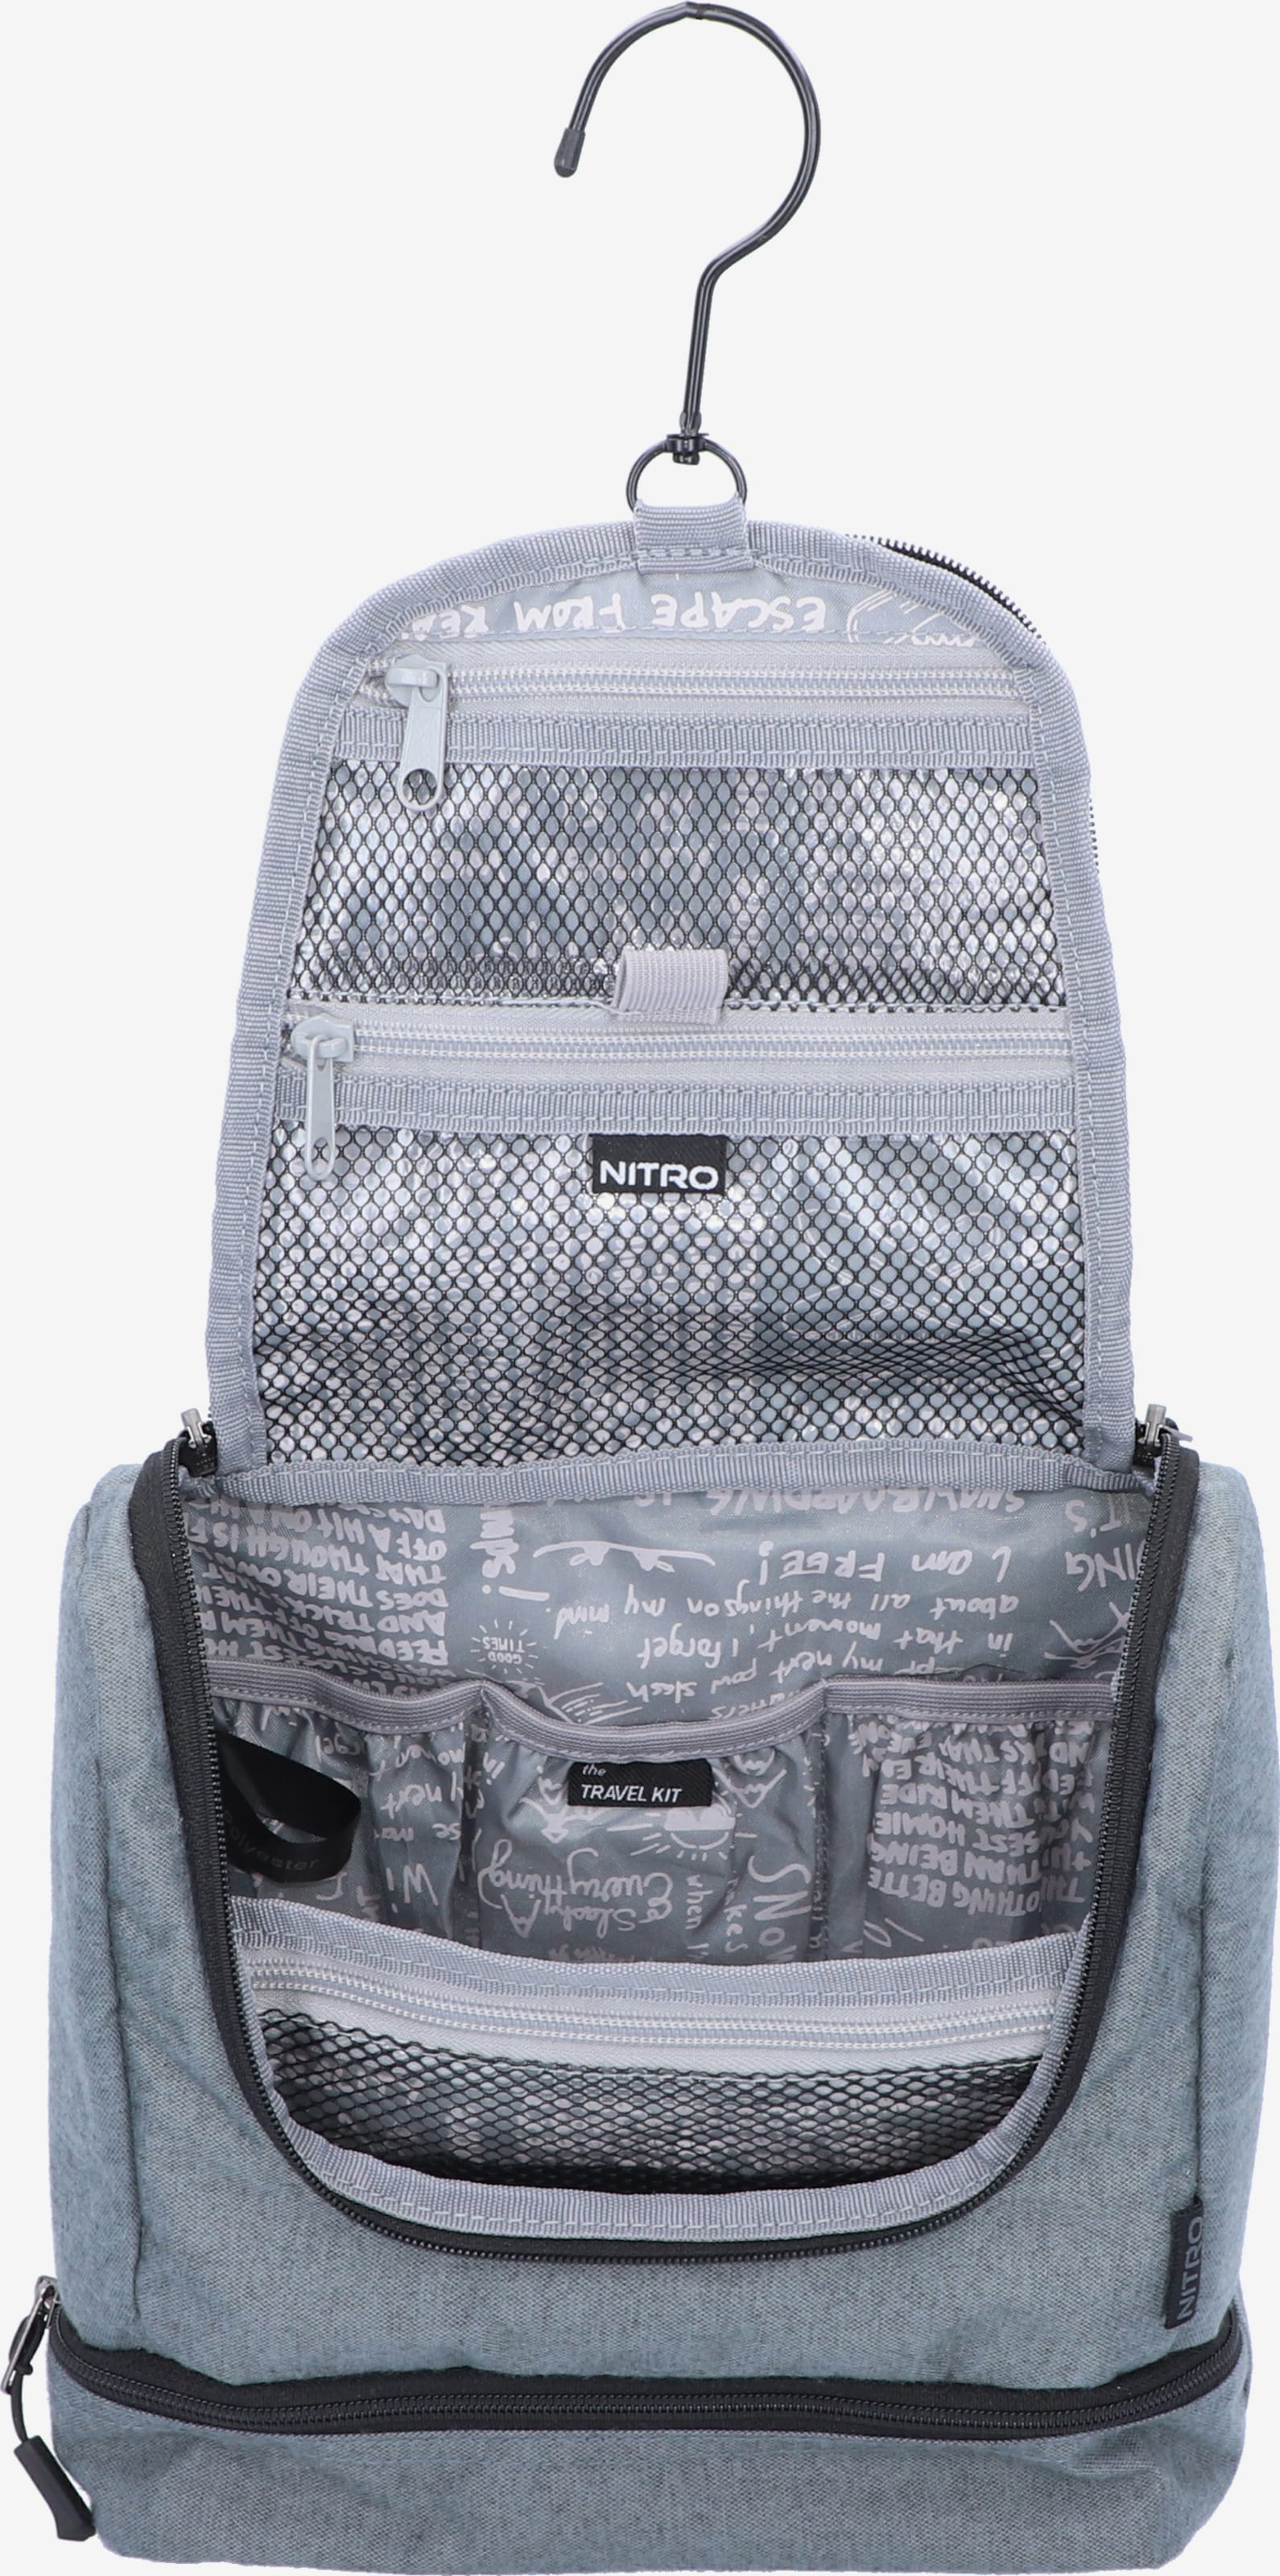 NitroBags Travelbags Travel Kit Kosmetiktasche 25 cm in Grau | ABOUT YOU